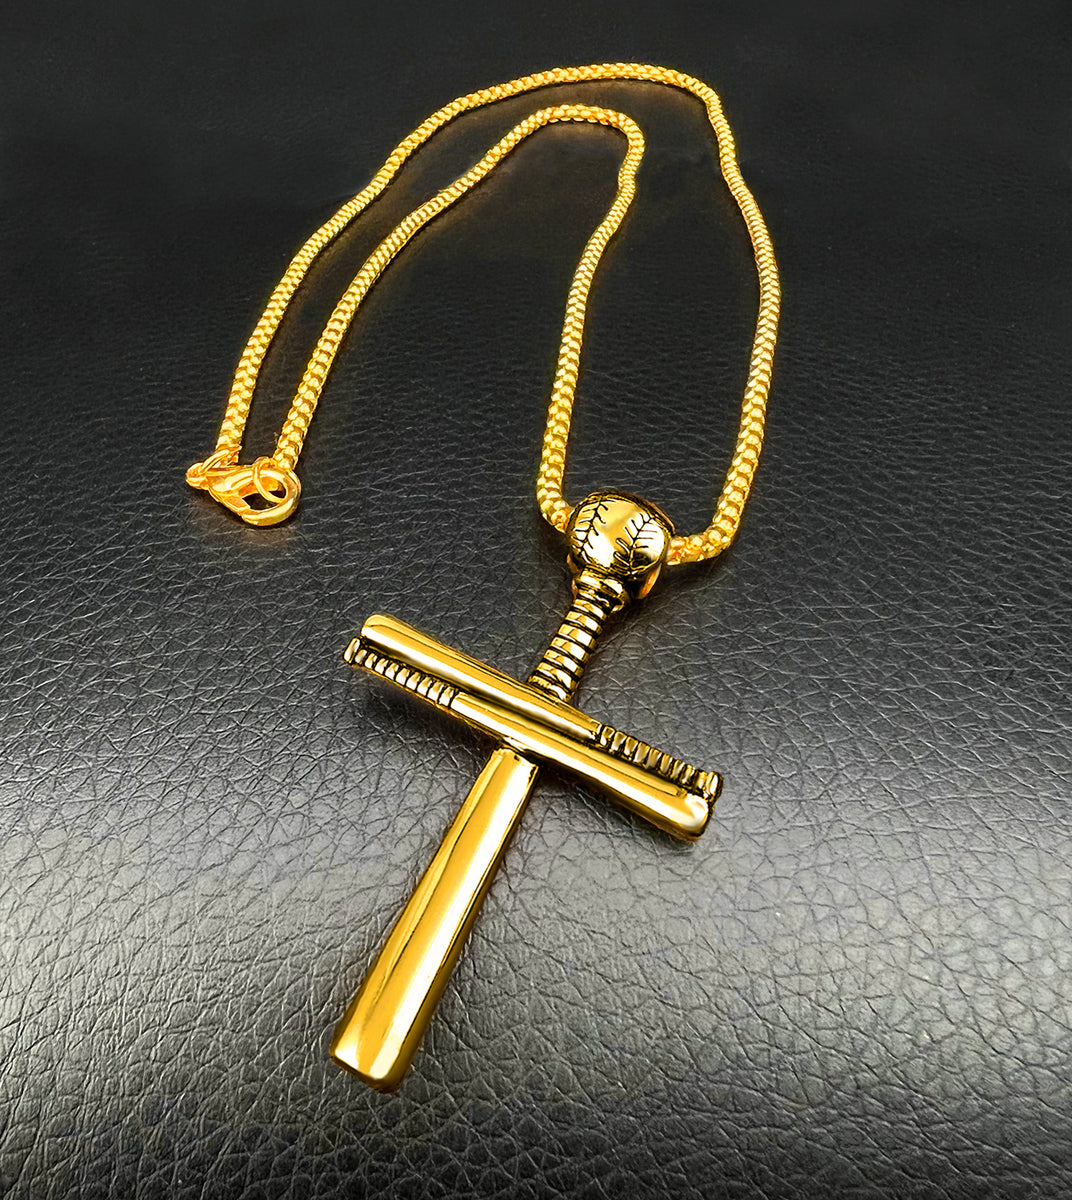  Amosfun 1 Roll Cross Chain Gold Chain for Jewelry